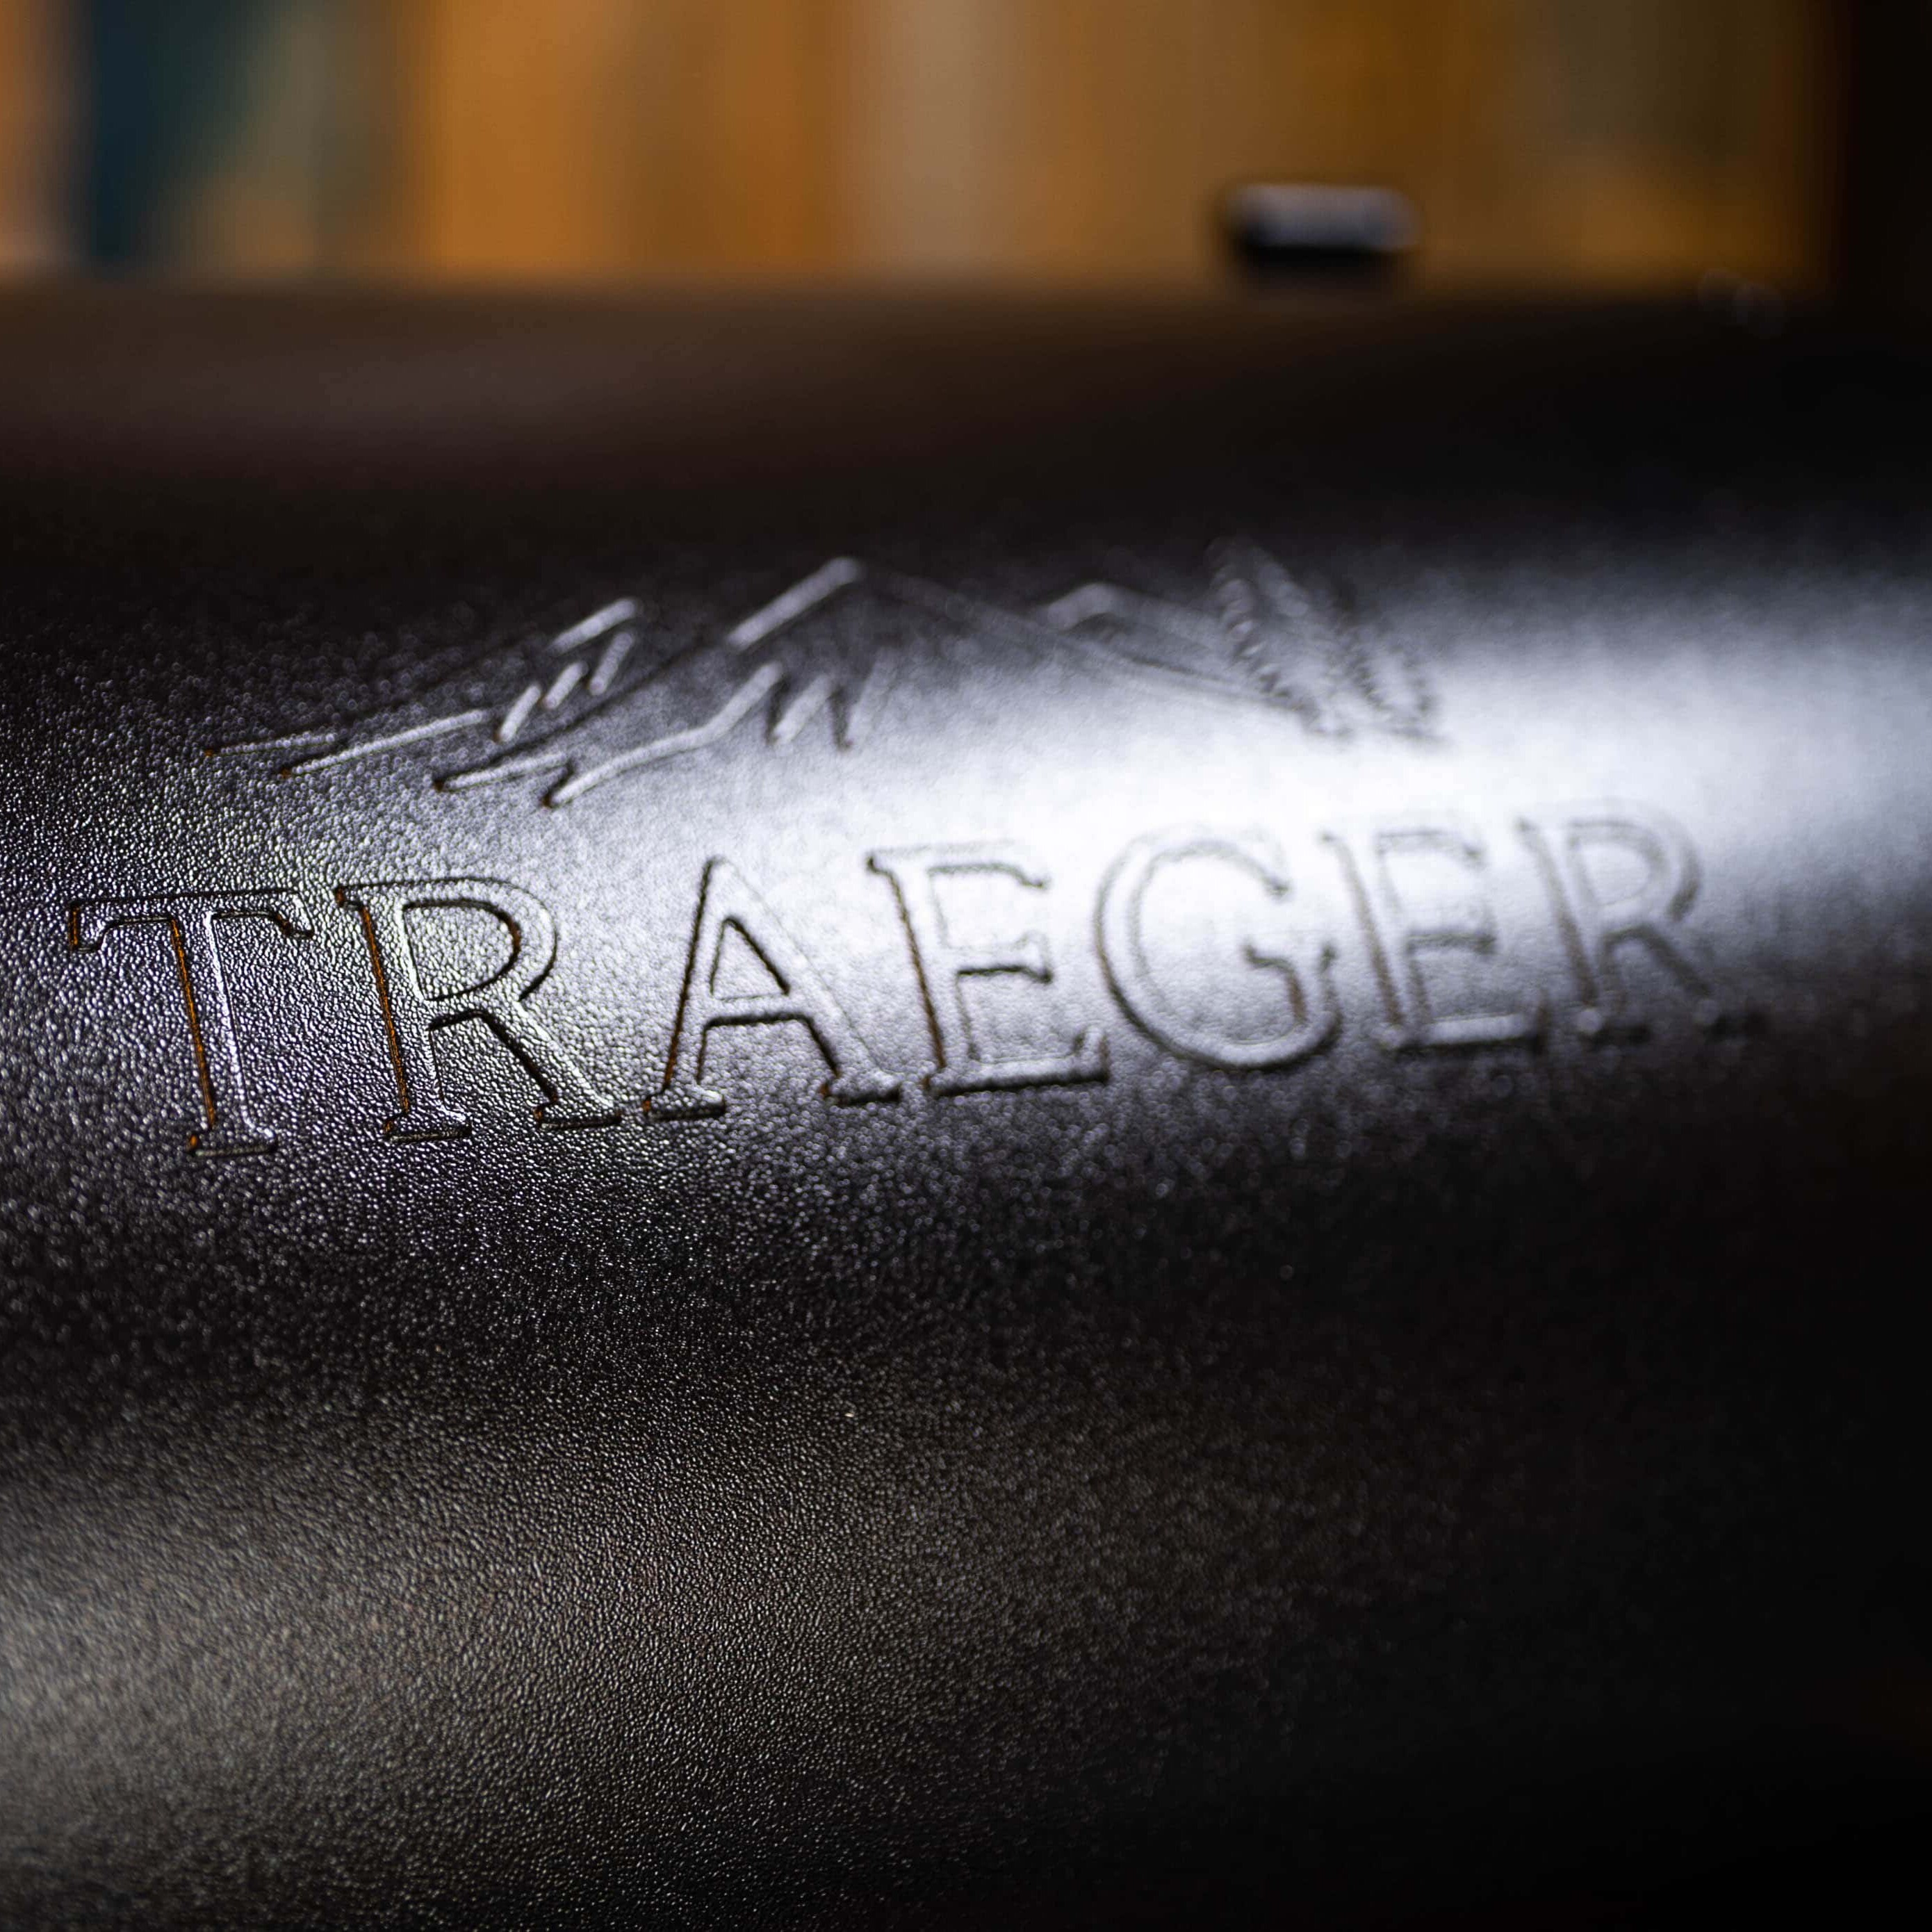 Traeger Pro 575